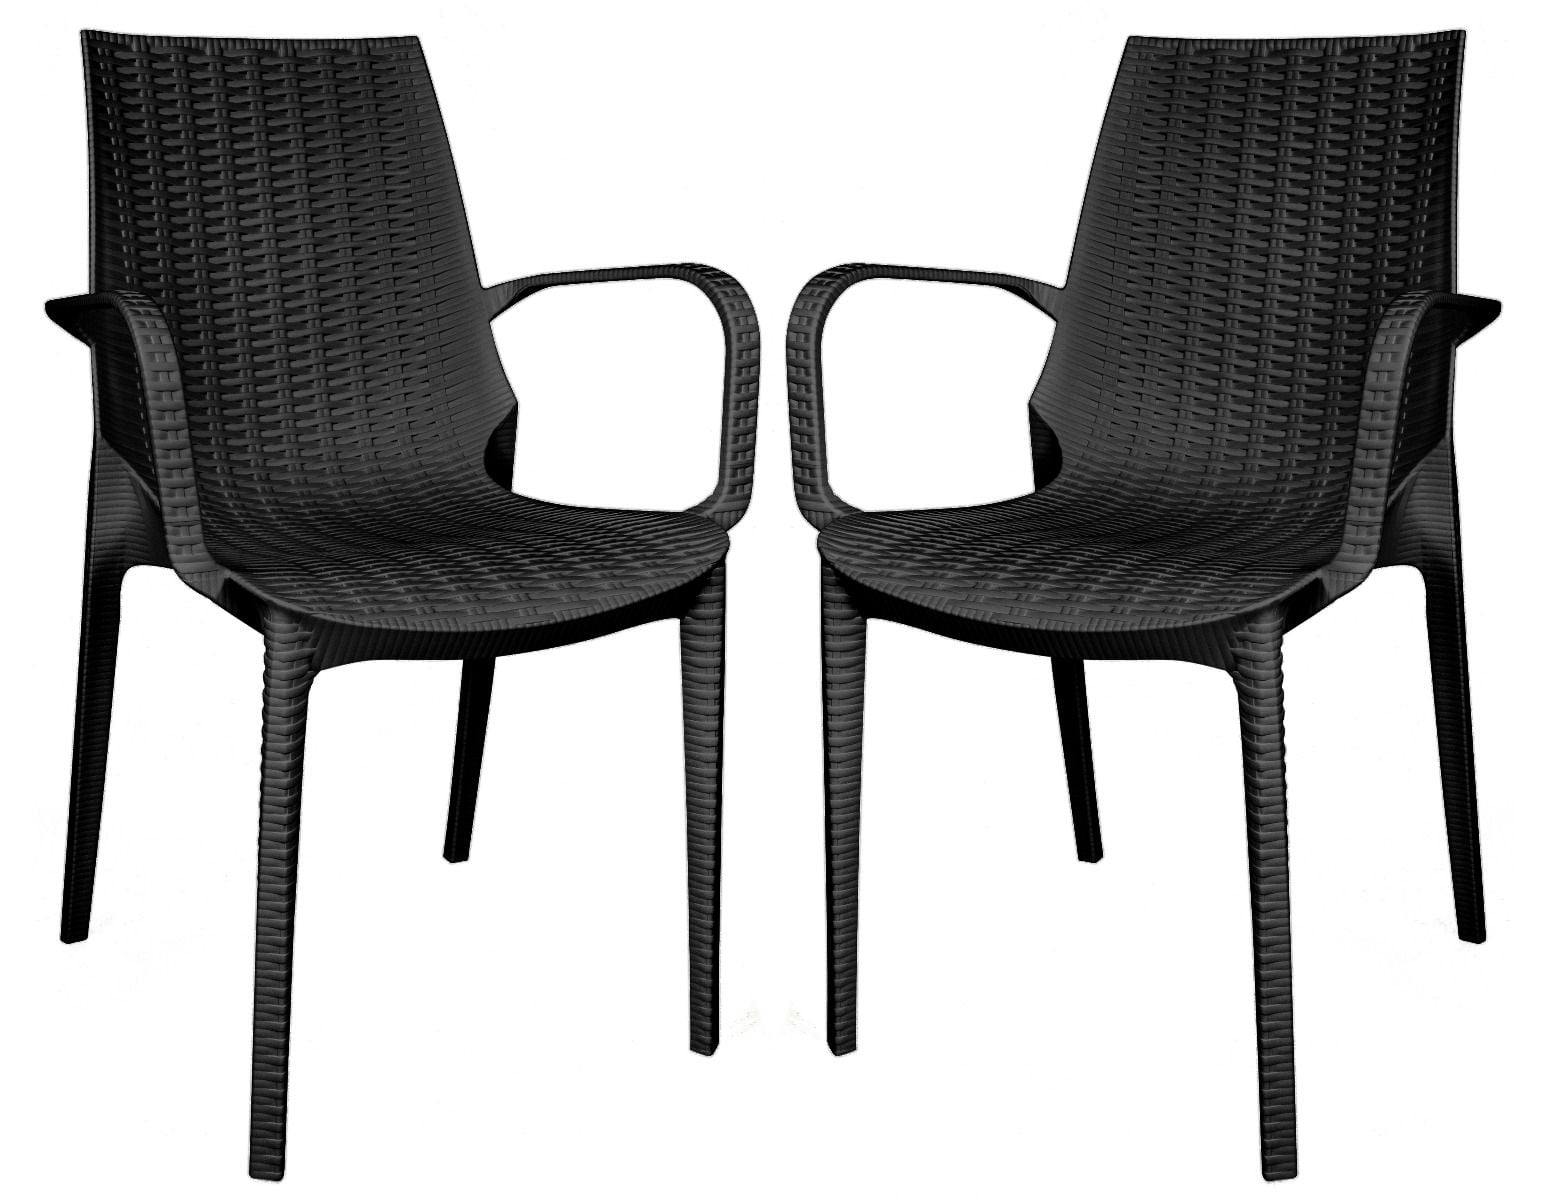 Kent 35'' Black Weave Design Polypropylene Outdoor Dining Chair - Set of 2